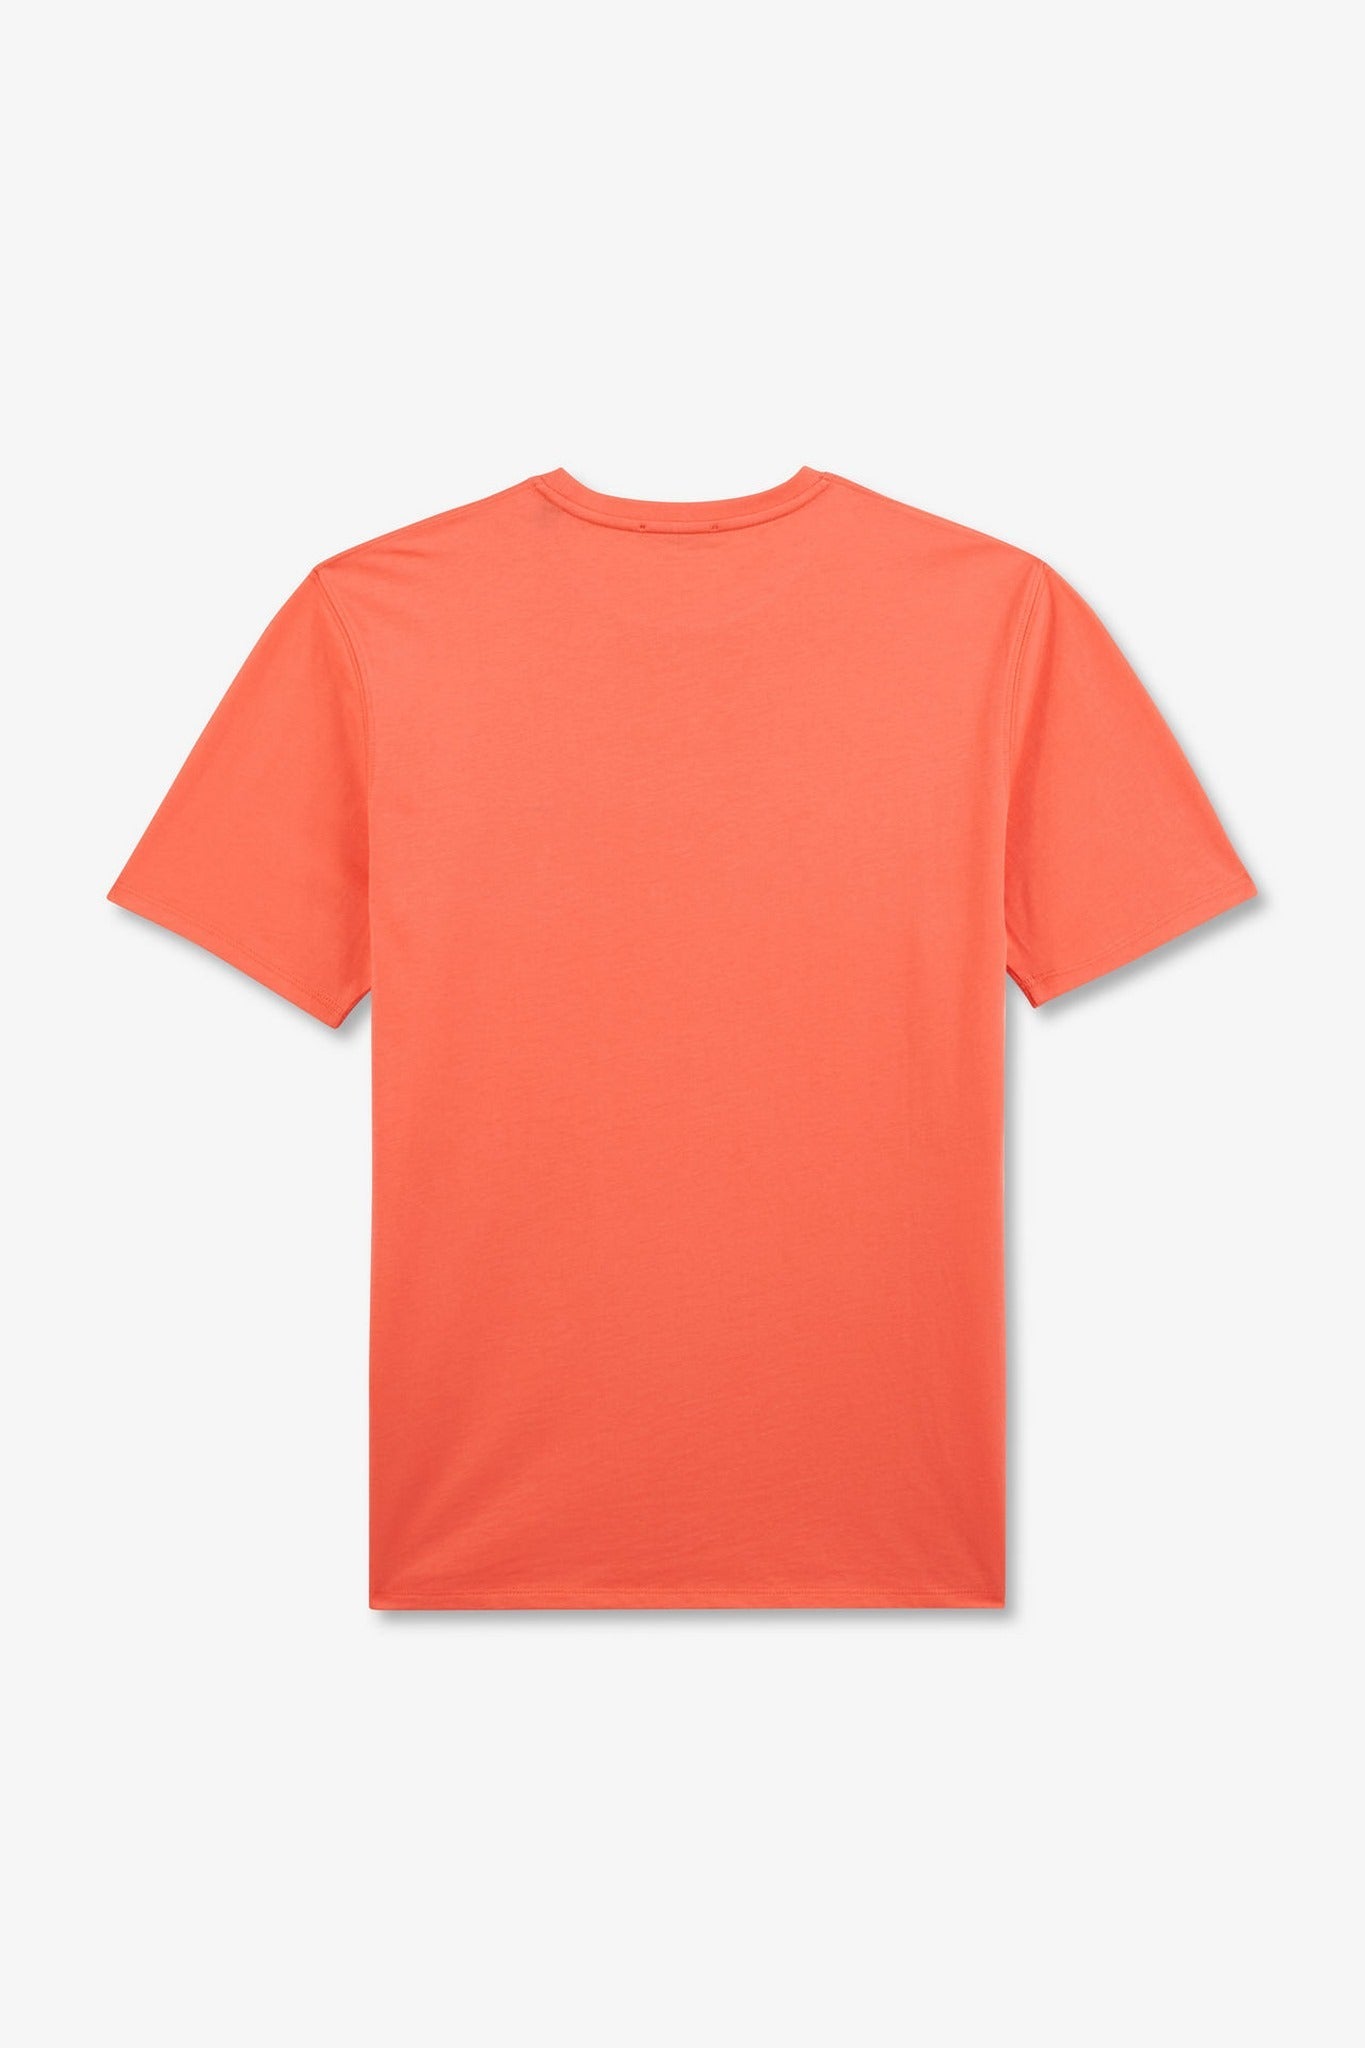 Pink short-sleeved t-shirt - Image 4